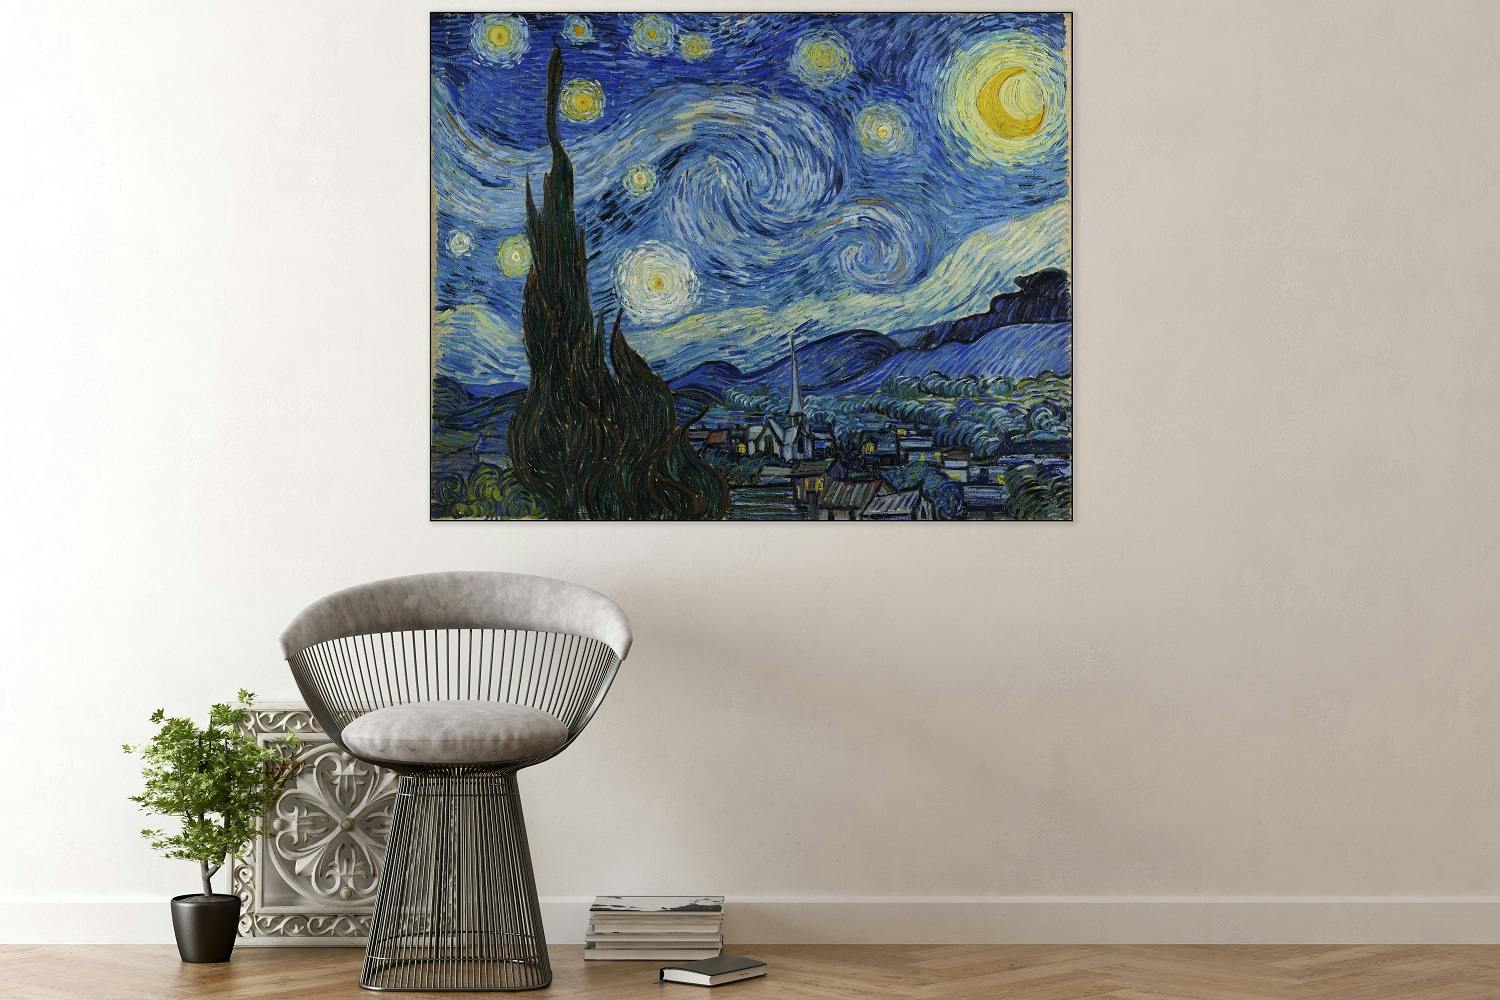 Fotopaneel - Vincent van Gogh - De sterrennacht